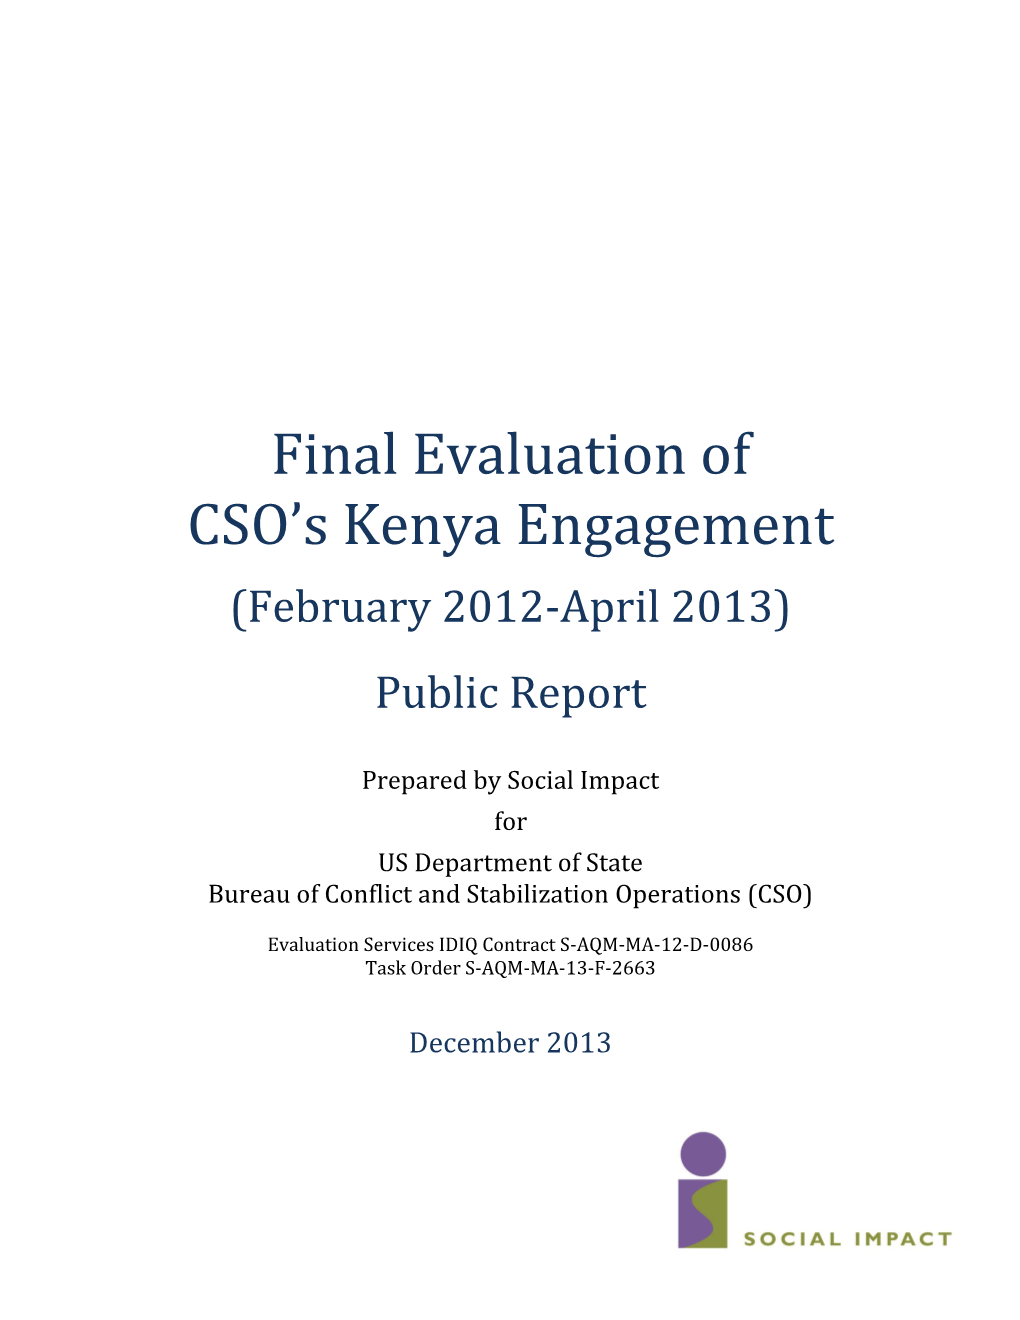 Final Evaluation of CSO's Kenya Engagement